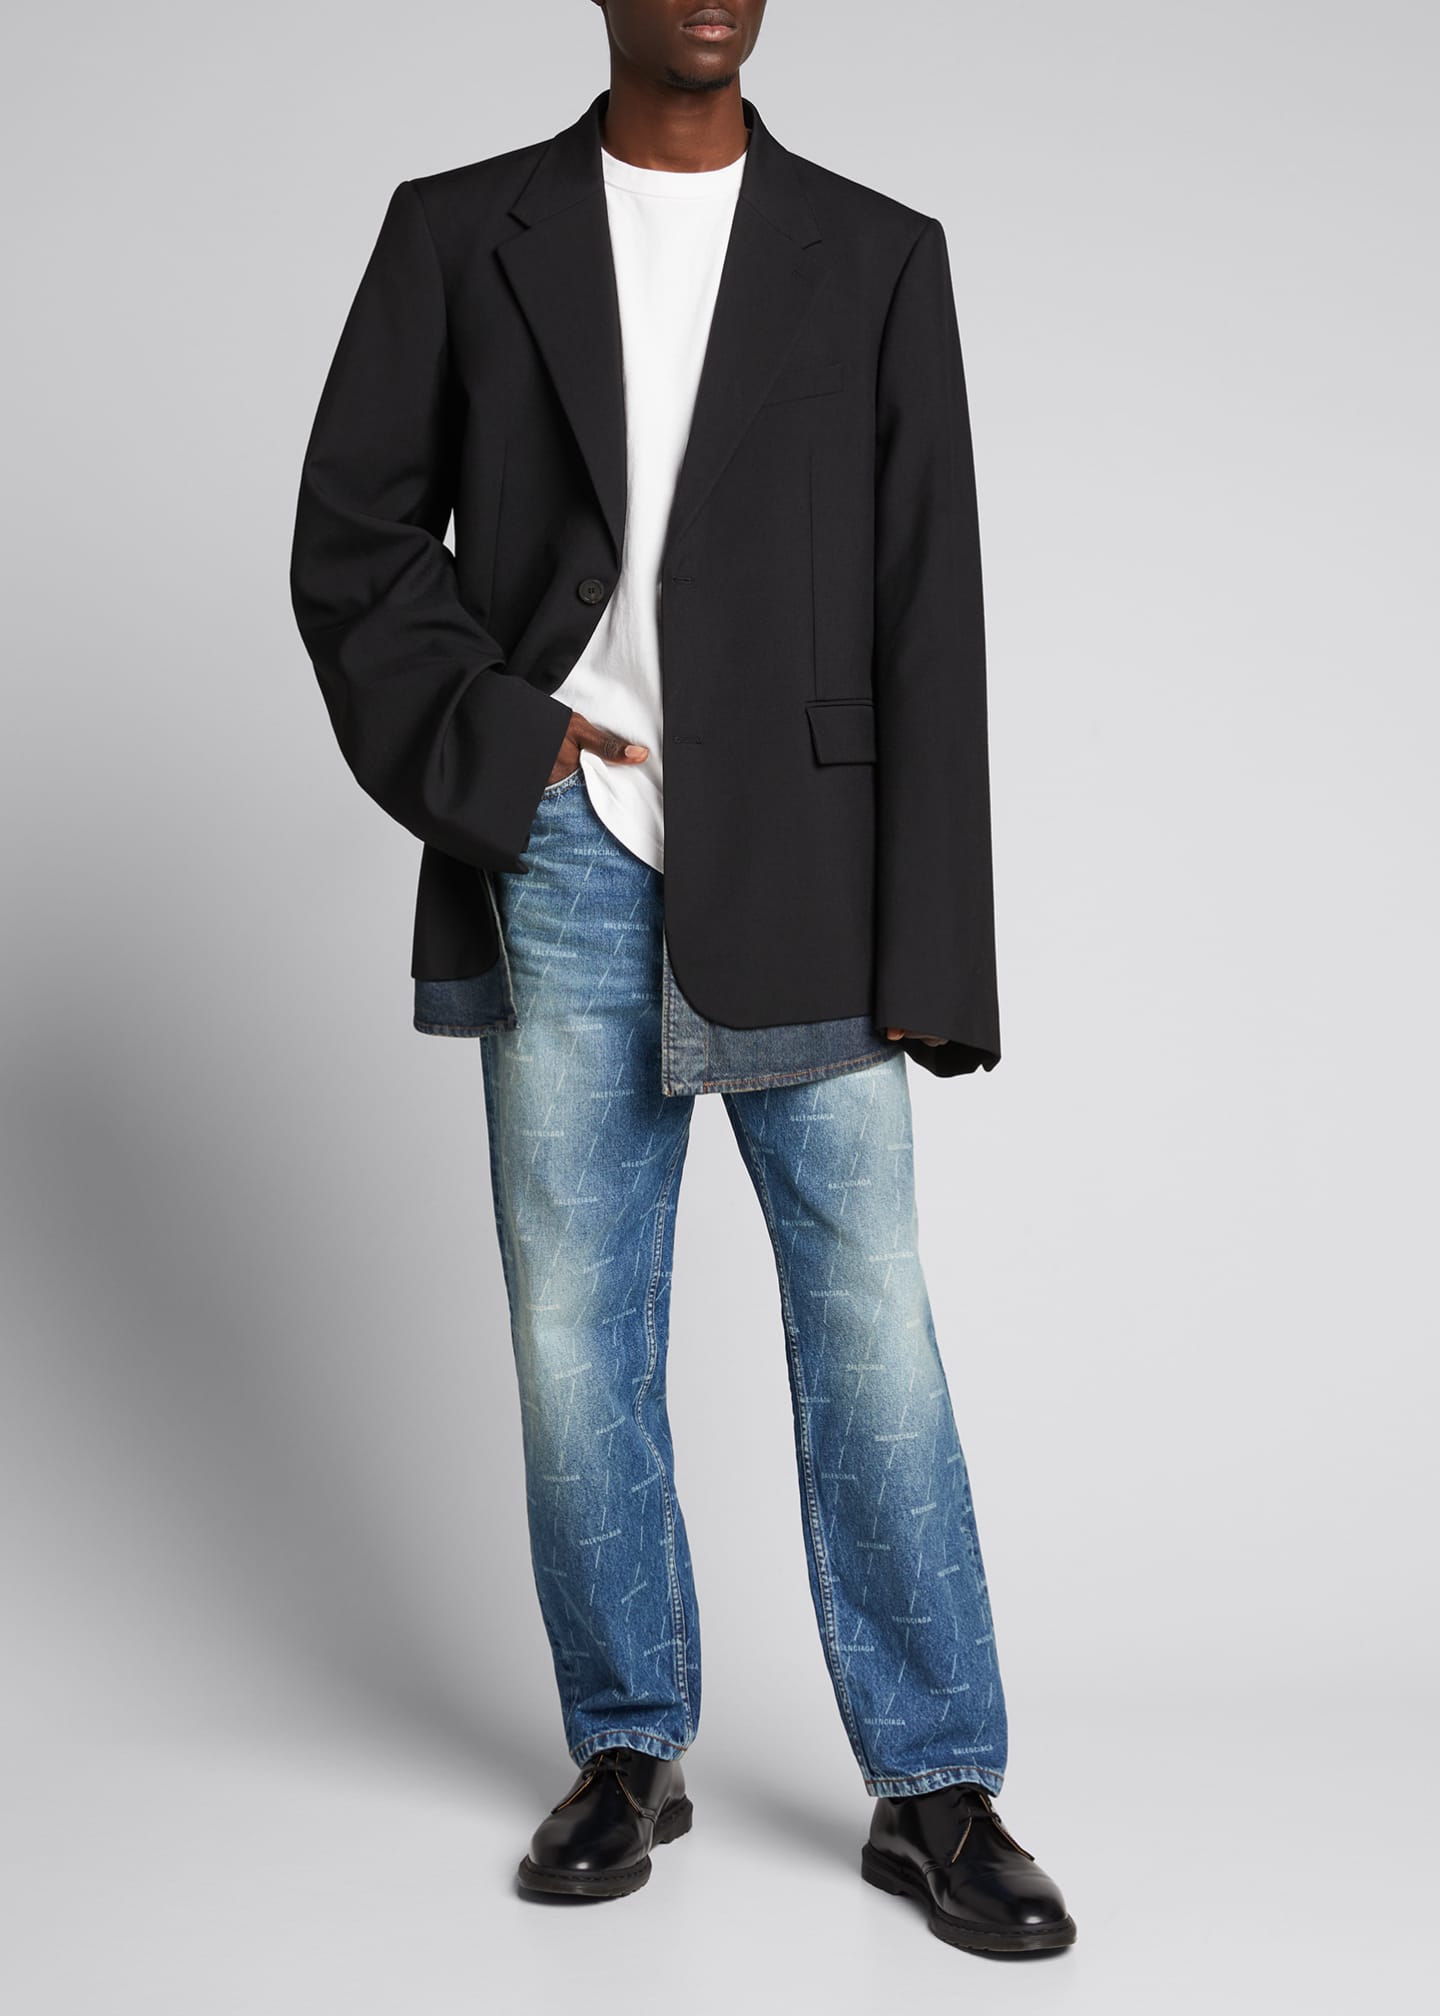 Balenciaga Men's Layered Oversized Blazer w/ Denim - Bergdorf Goodman